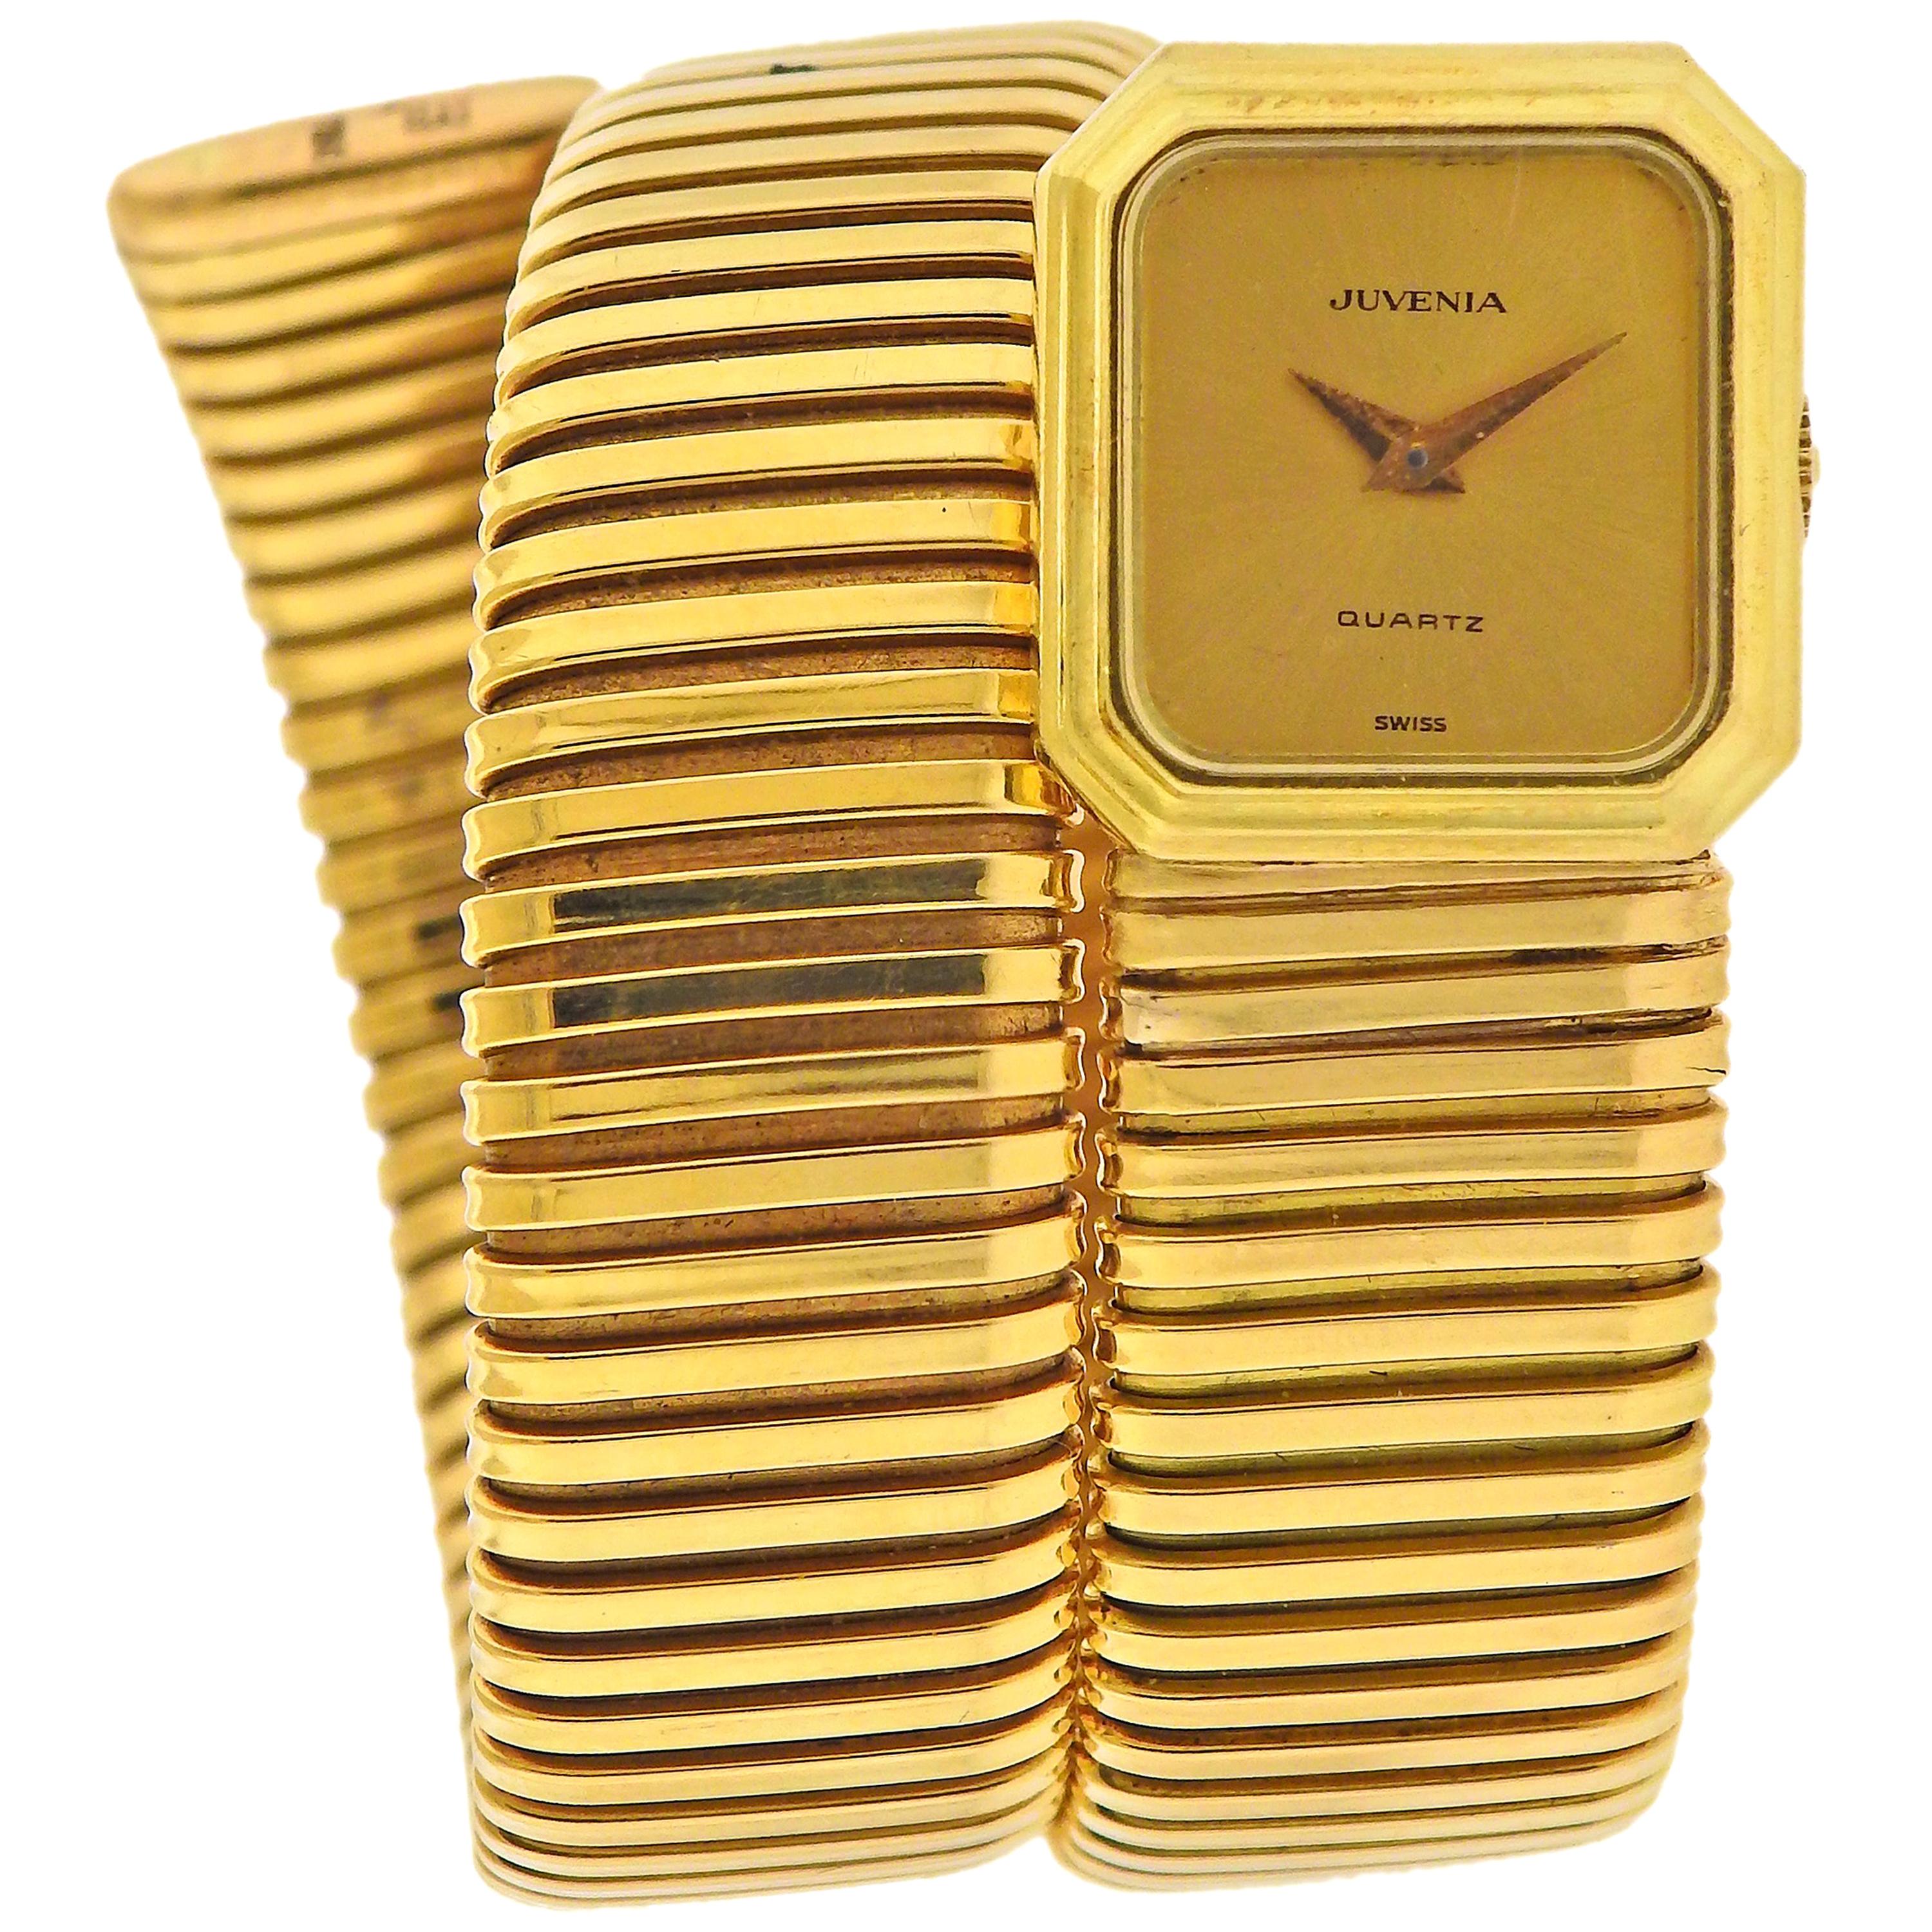 Marina B Gold Bracelet Juvenia Watch For Sale